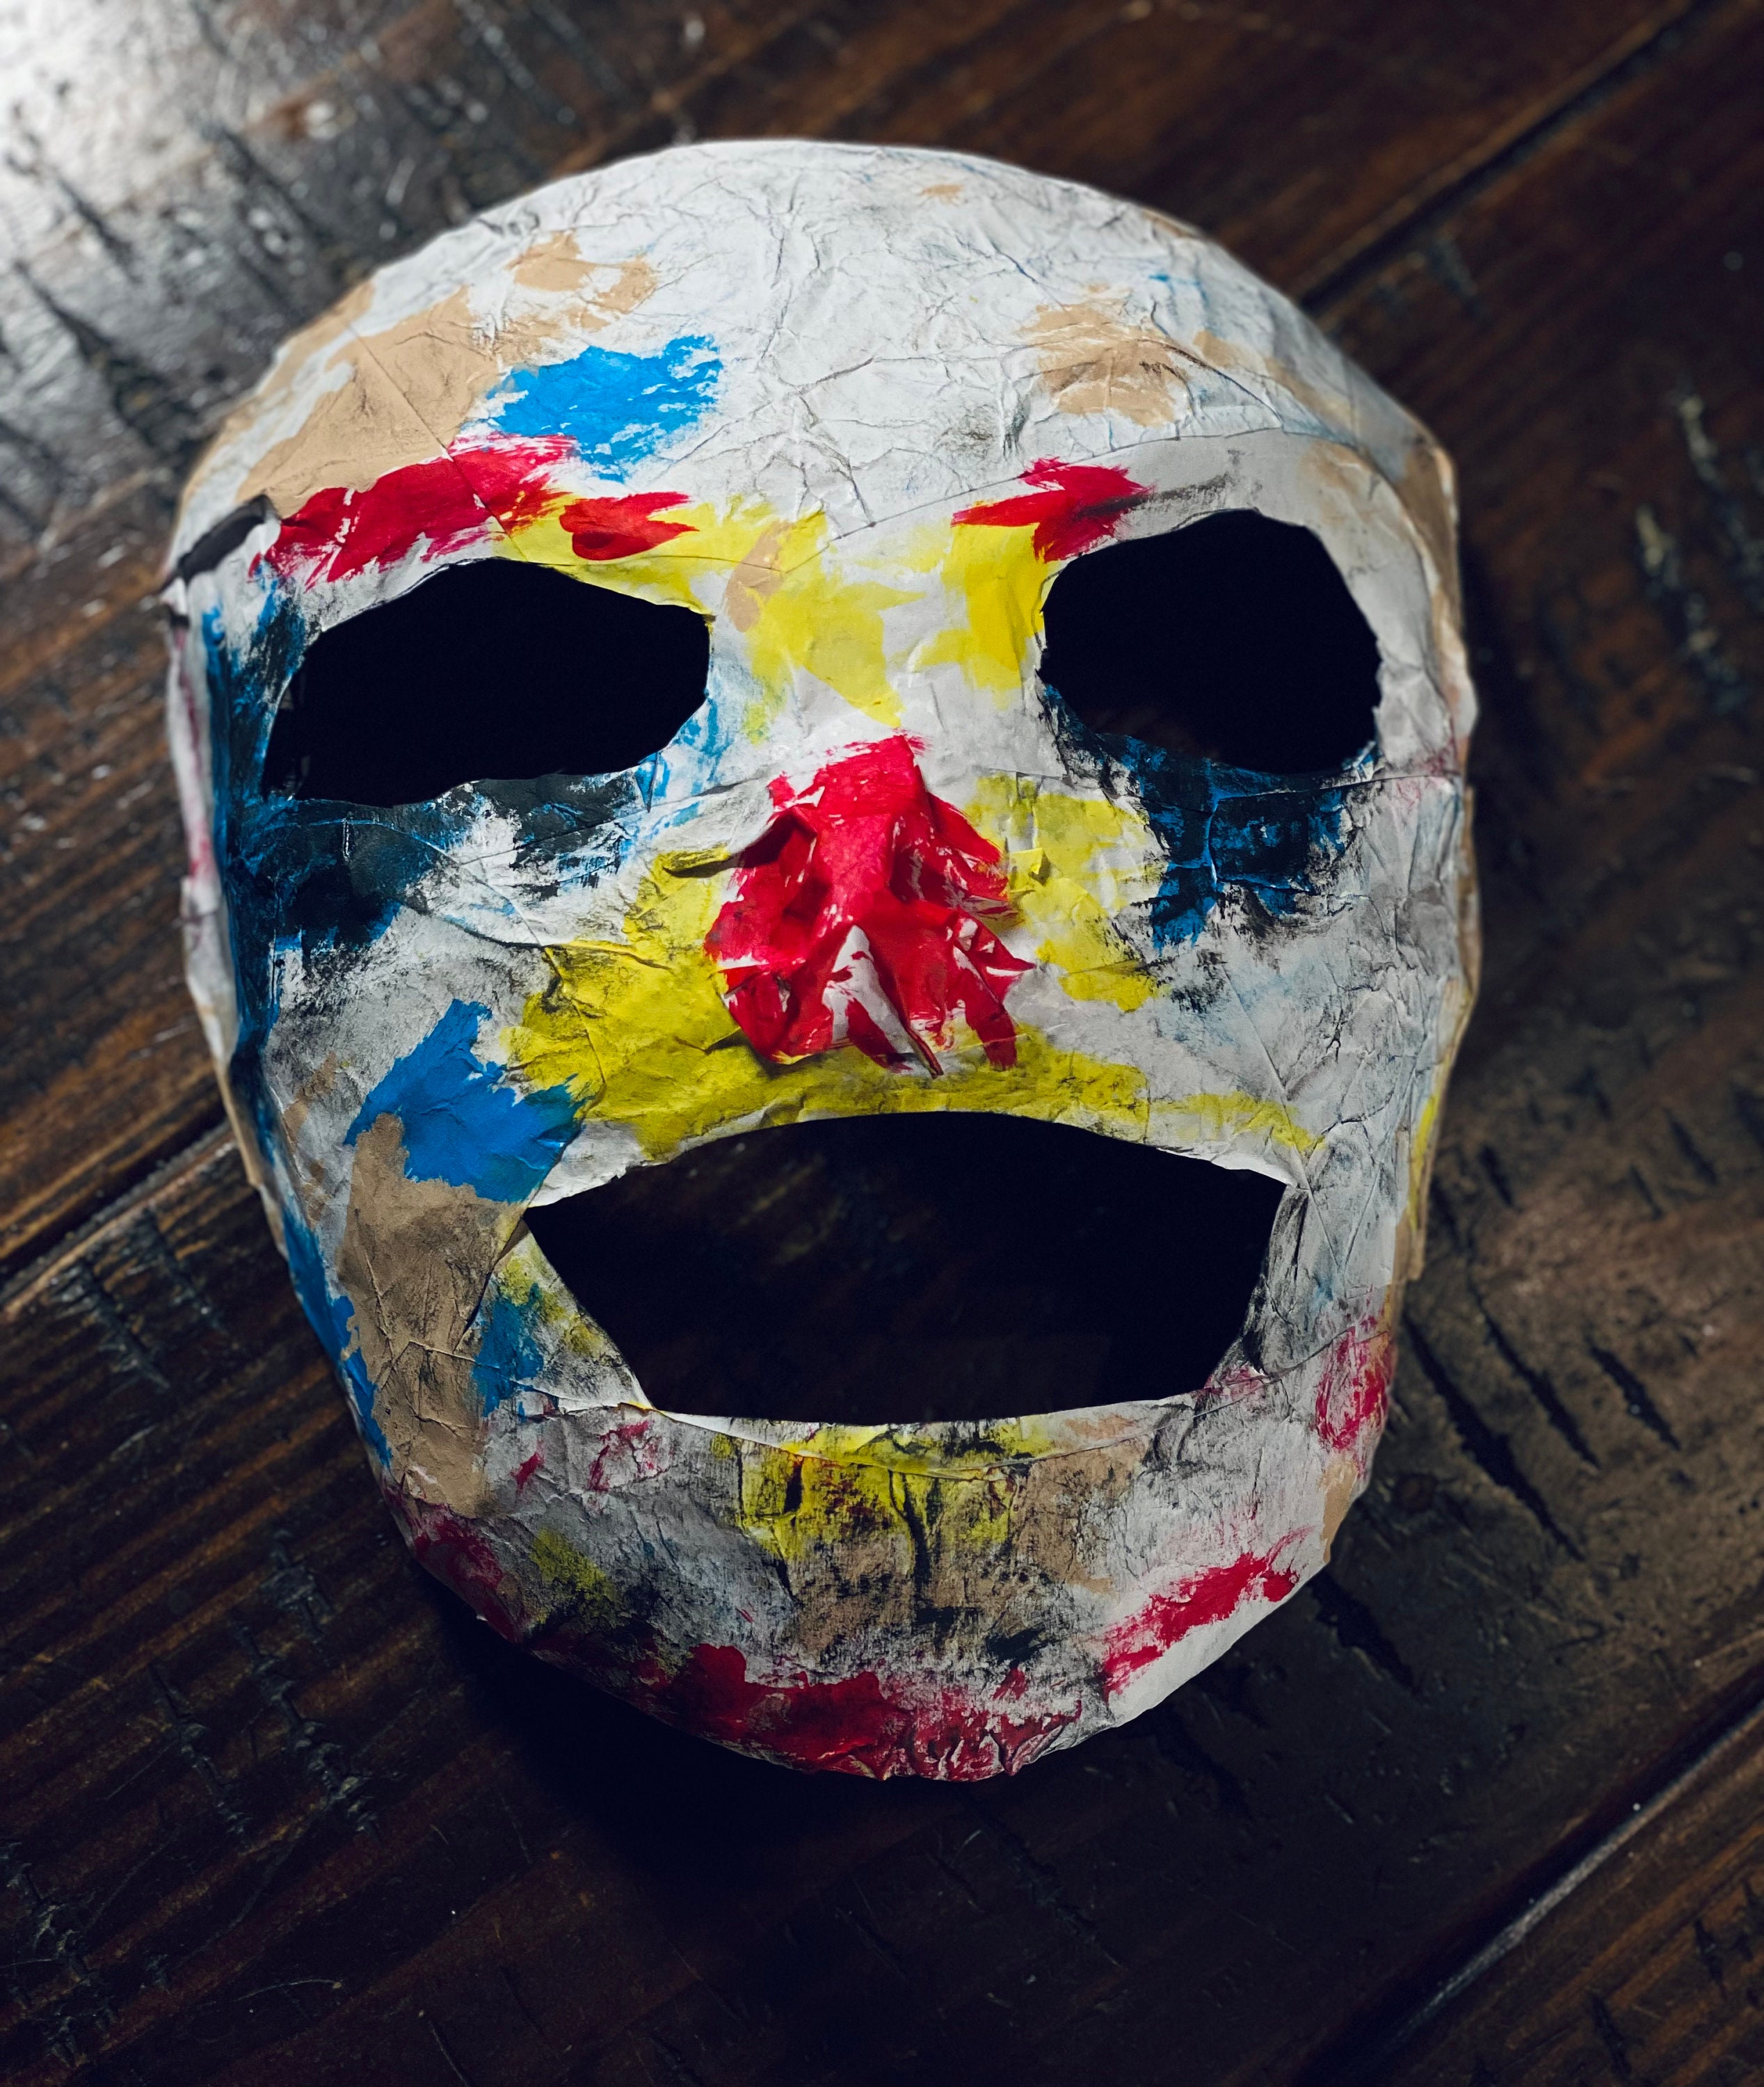 rob zombie halloween clown mask